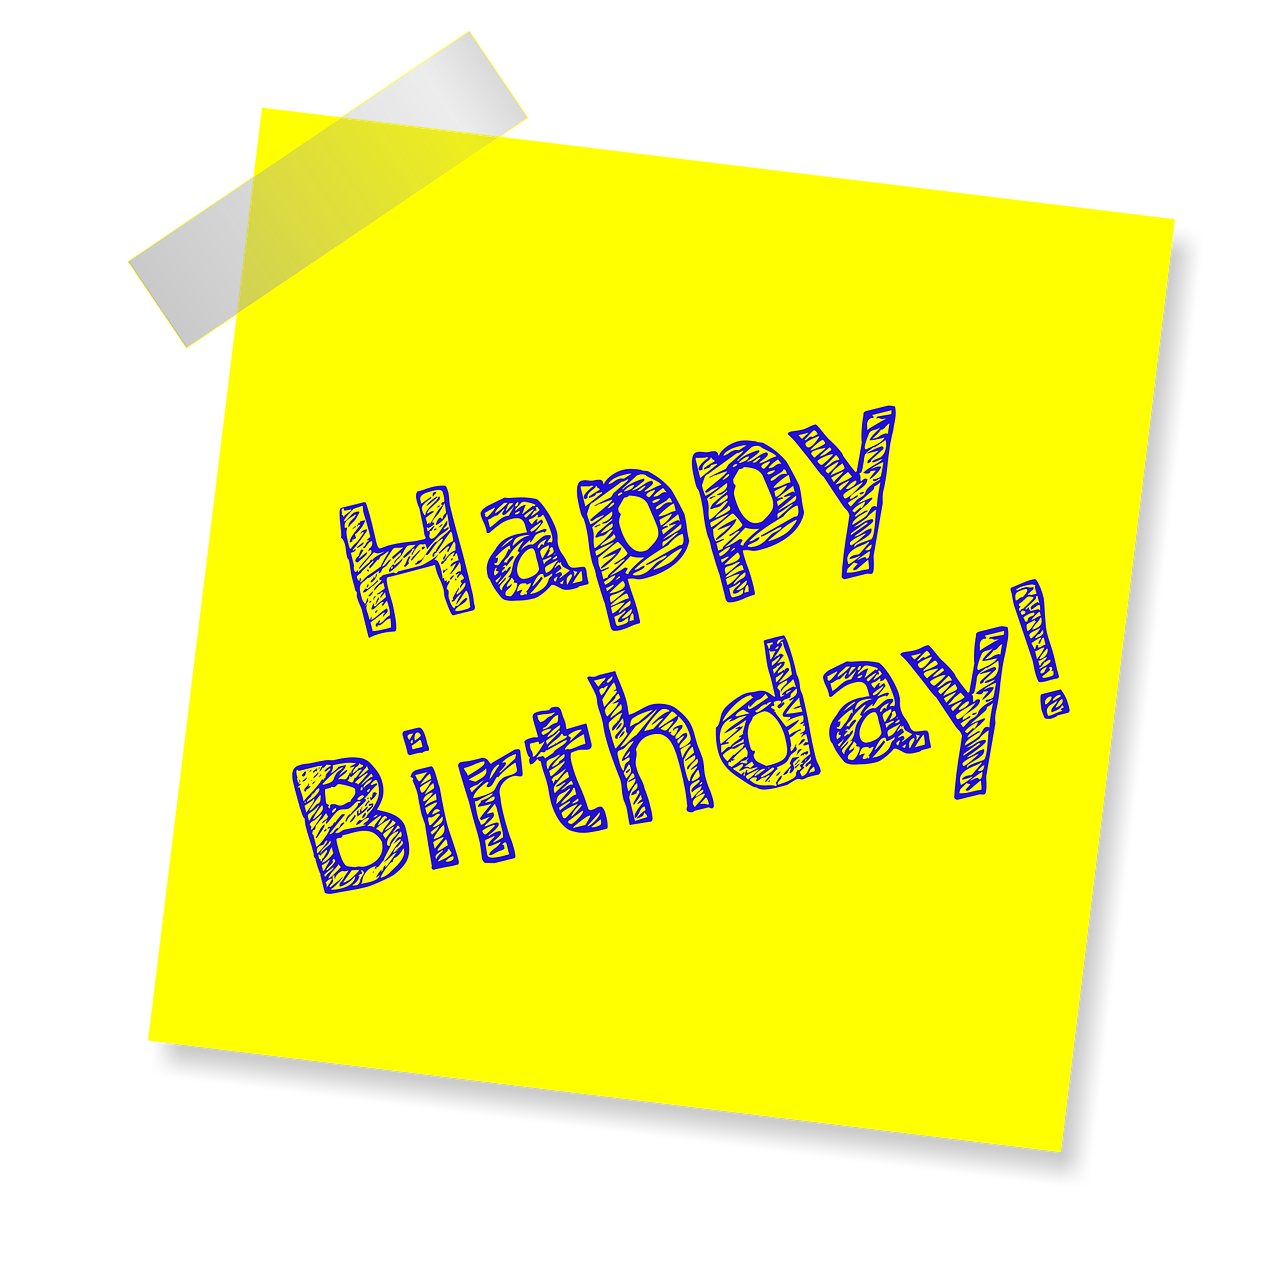 birthday-happy-birthday-yellow-note-sign-free-image-from-needpix